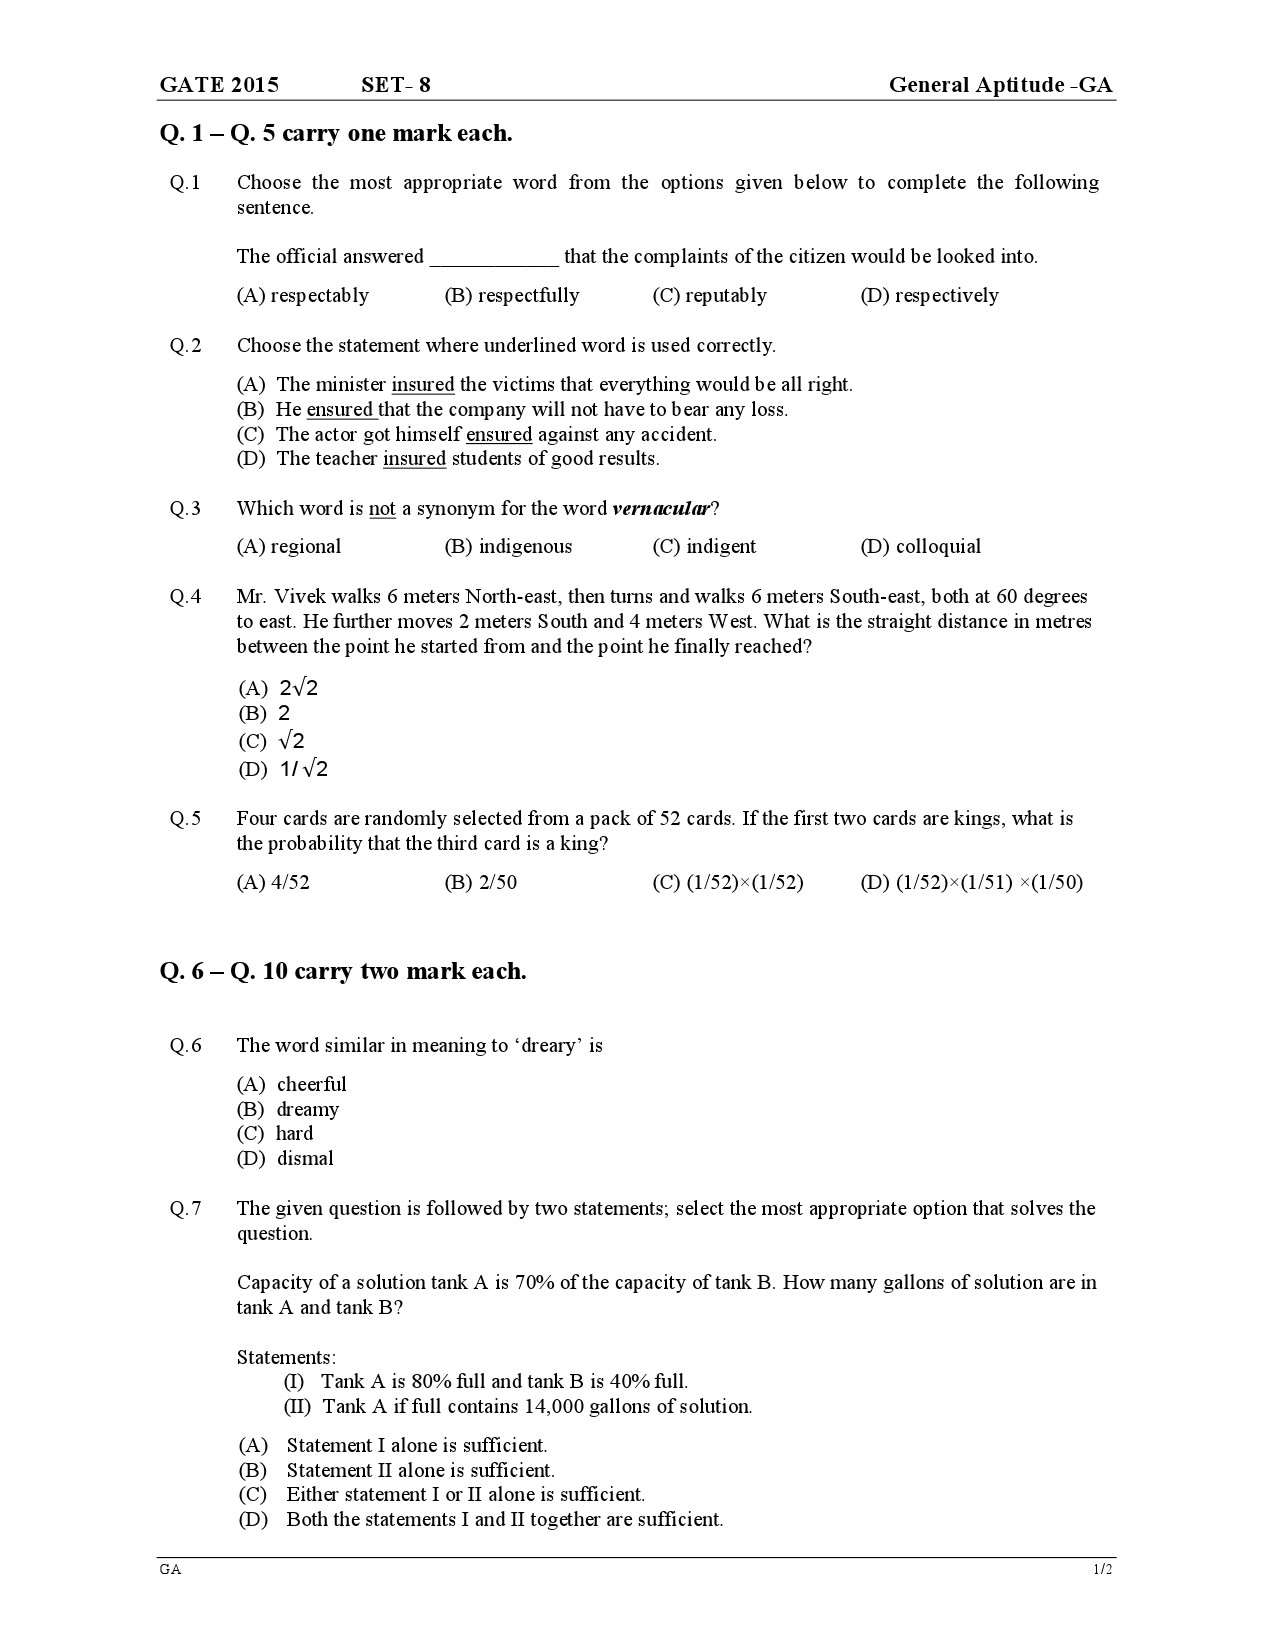 GATE Exam Question Paper 2015 General Aptitude 17